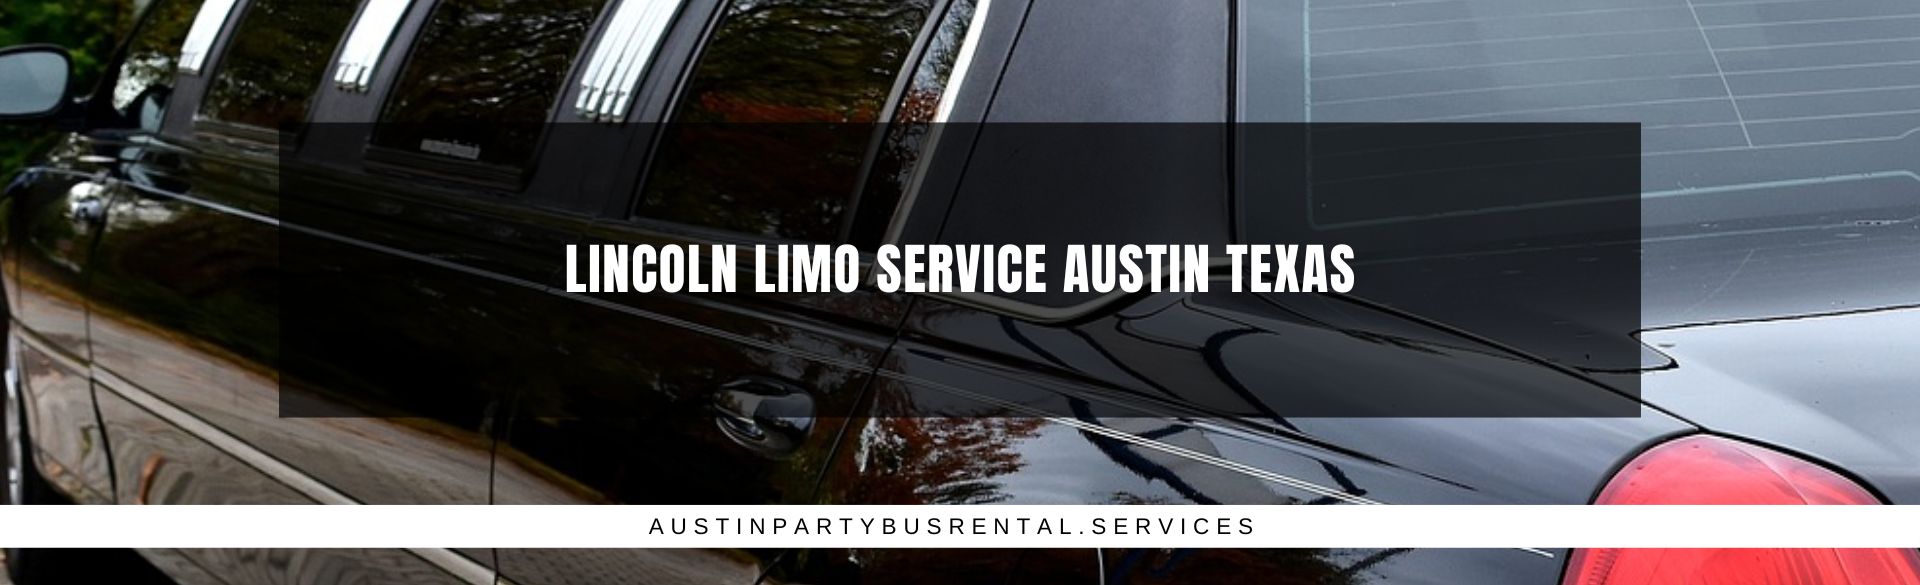 Lincoln Limo Service Austin Texas